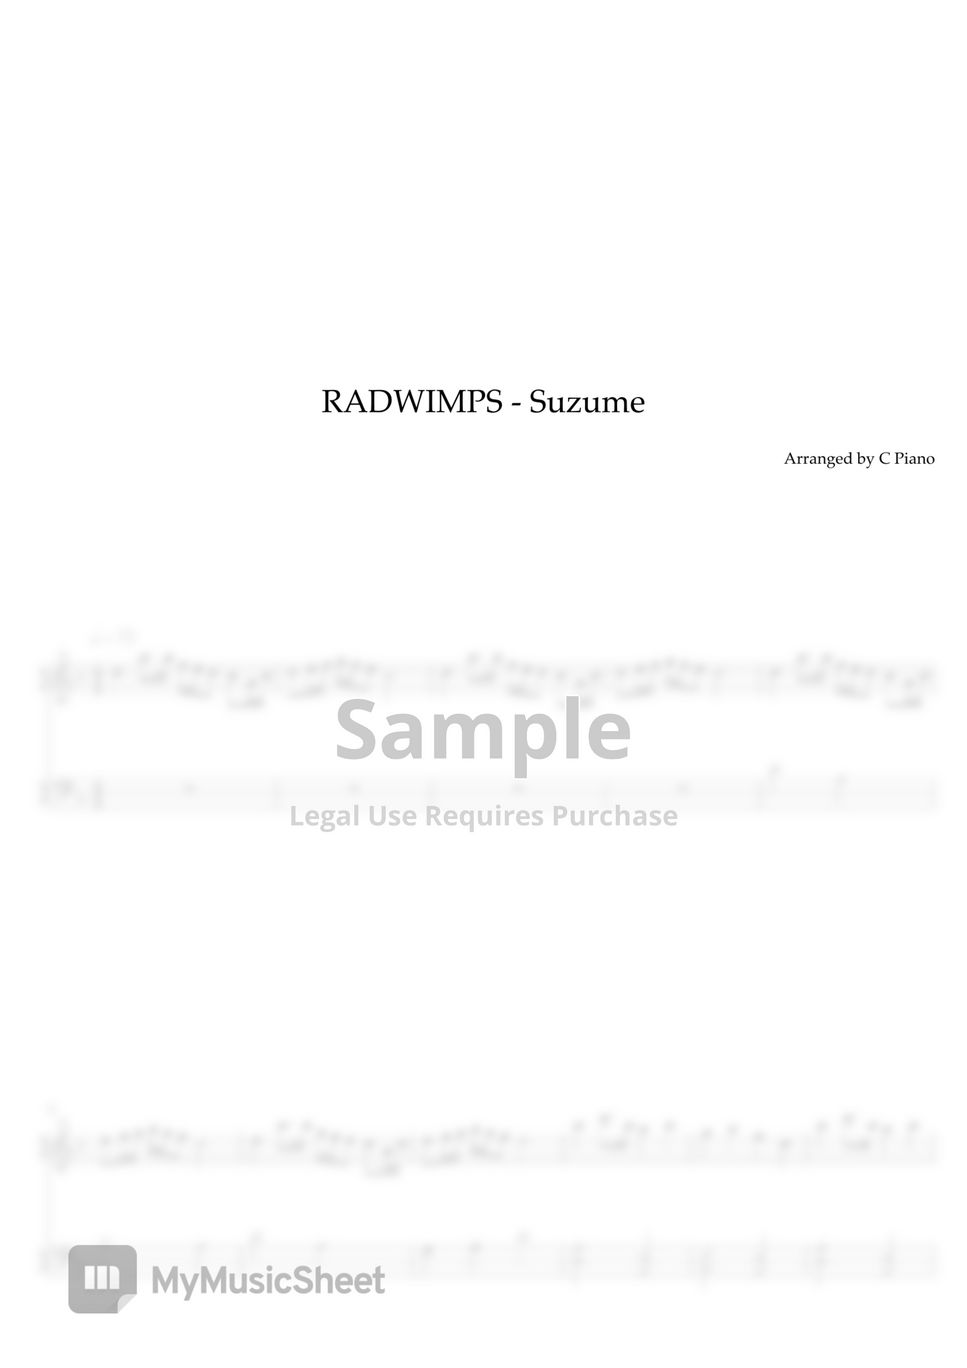 RADWIMPS - Suzume (Easy Version) by C Piano